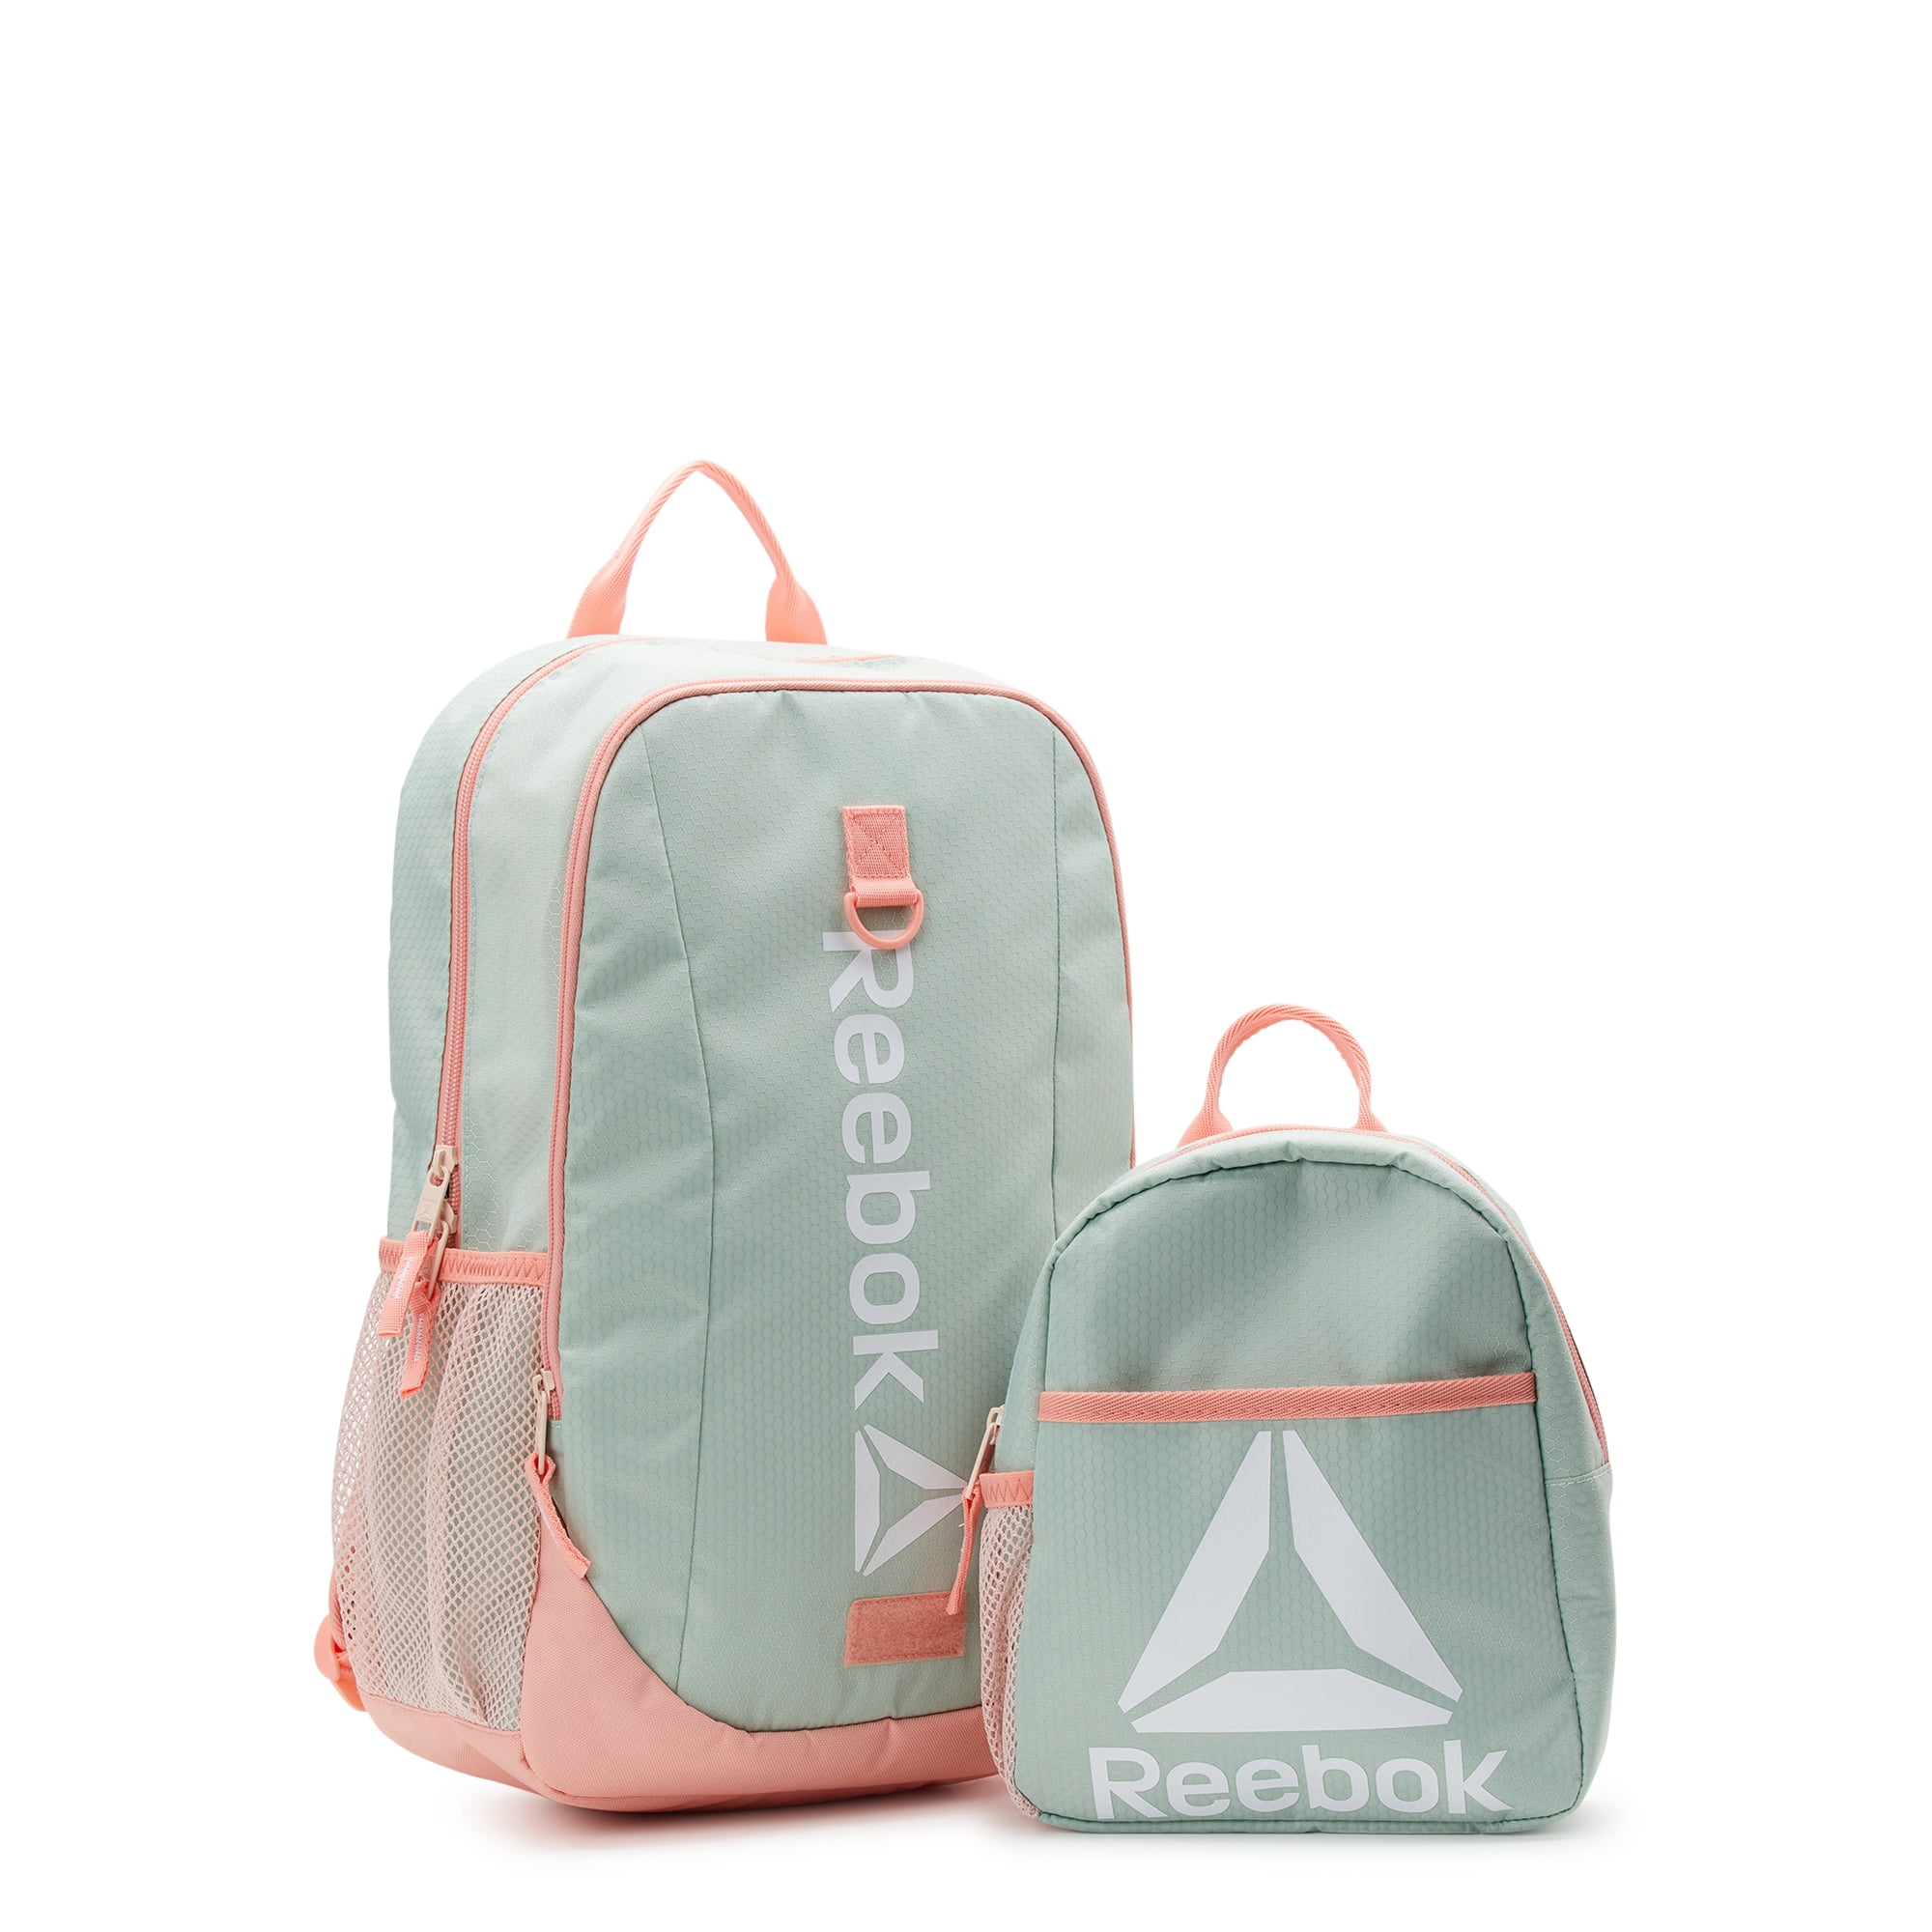 Reebok Childrens Unisex Laptop Backpack, 2-Piece Lunch Green - Walmart.com